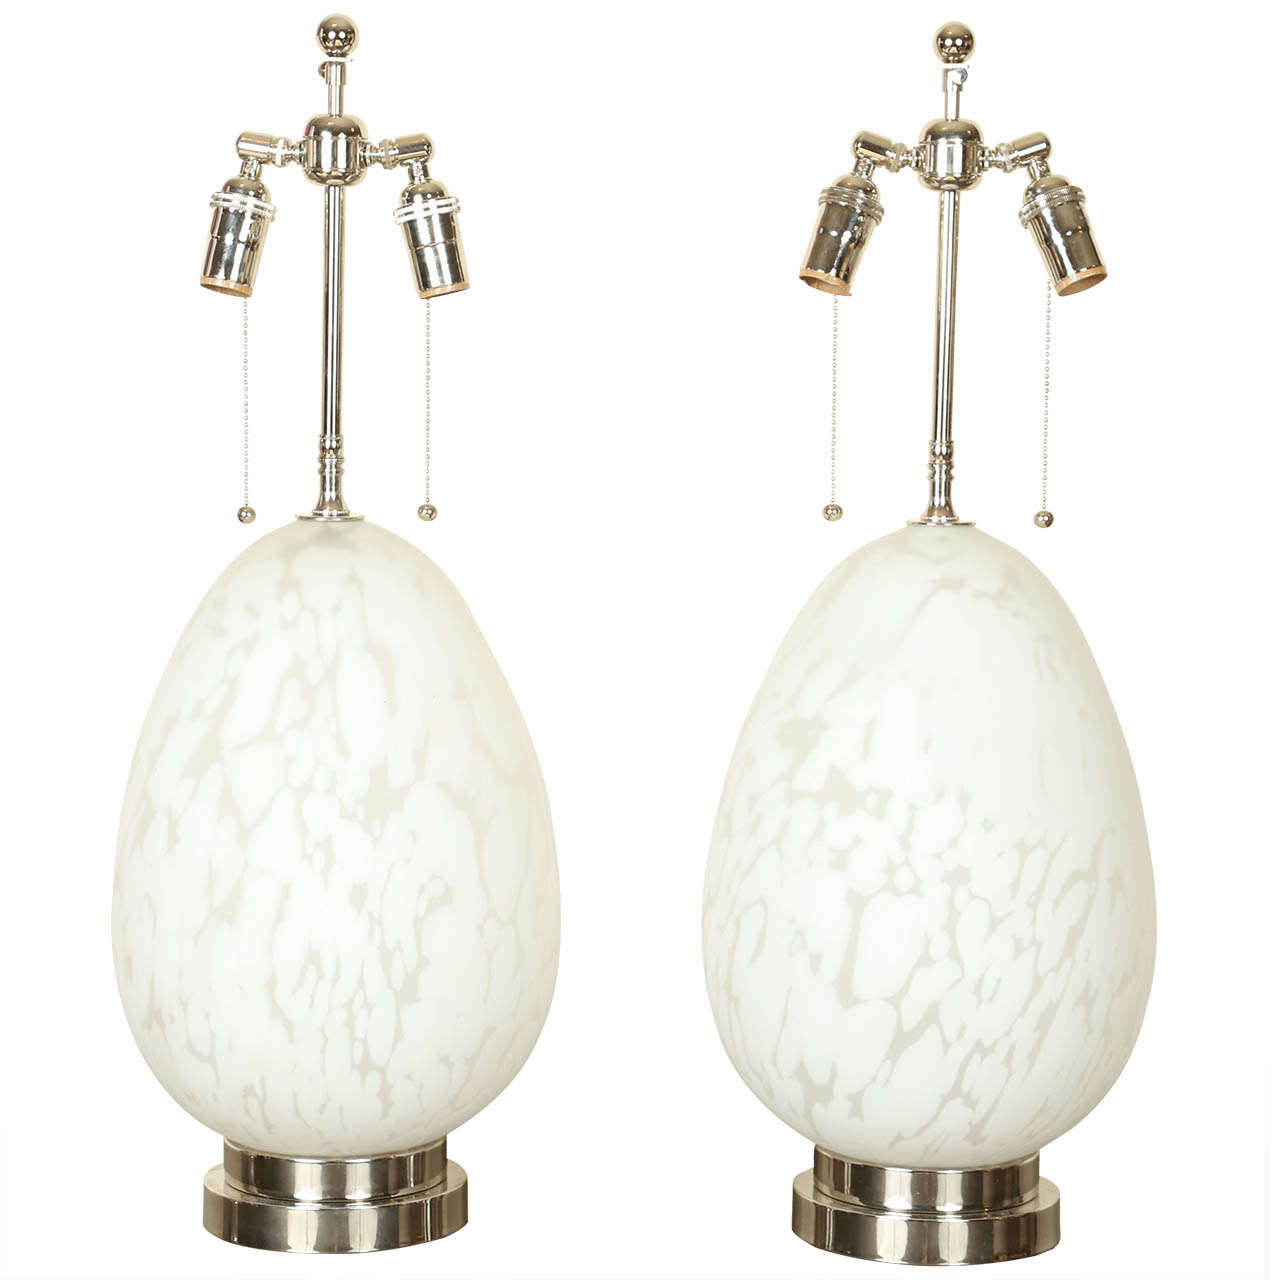 Pair of Beautiful Glass "Egg" Lamps